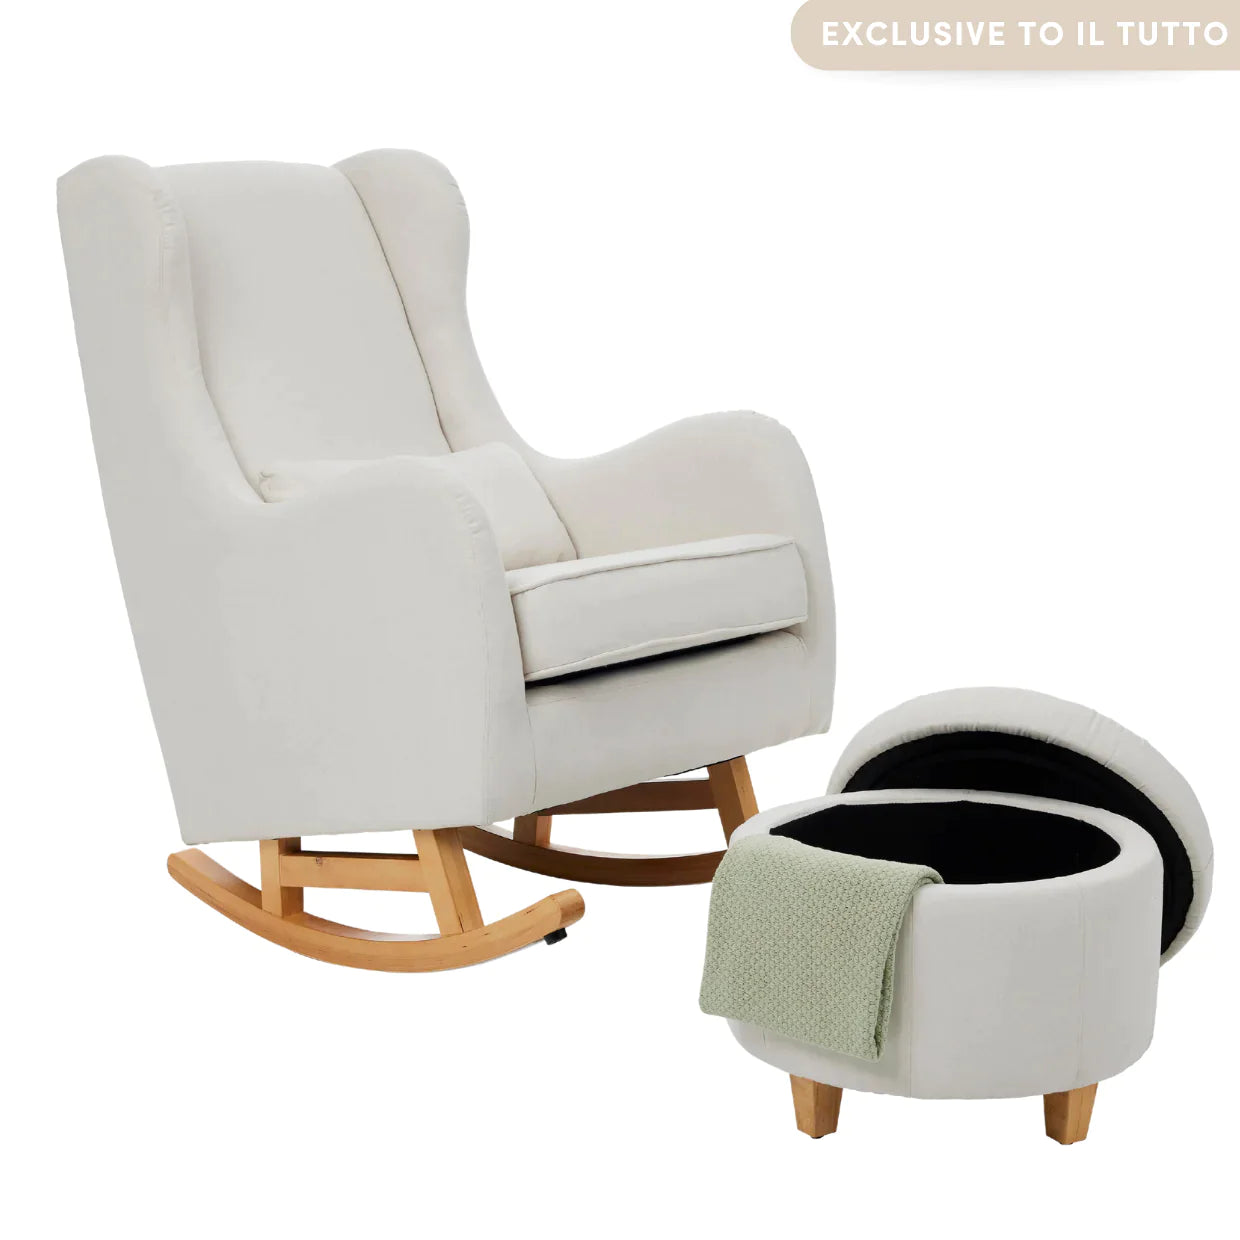 Il Tutto Olivia Rocking Nursery Chair & Footstool